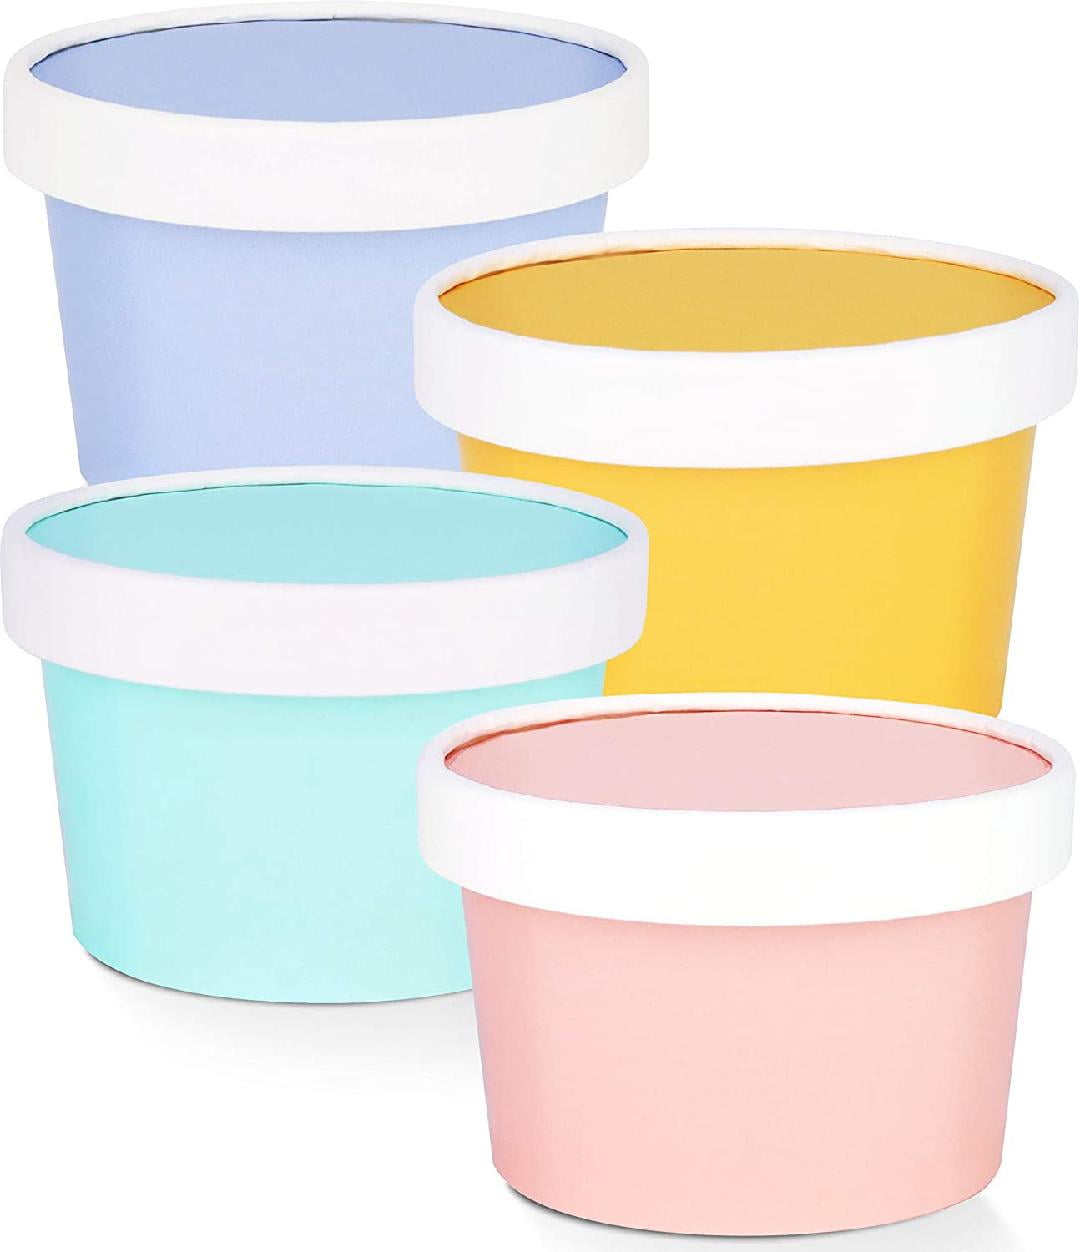 Gandeer 12 Pieces 6 oz Mini Ice Cream Containers Reusable Freezer Storage  Tub with Lids Storage Container for Homemade Ice Cream Dessert Food Freezer